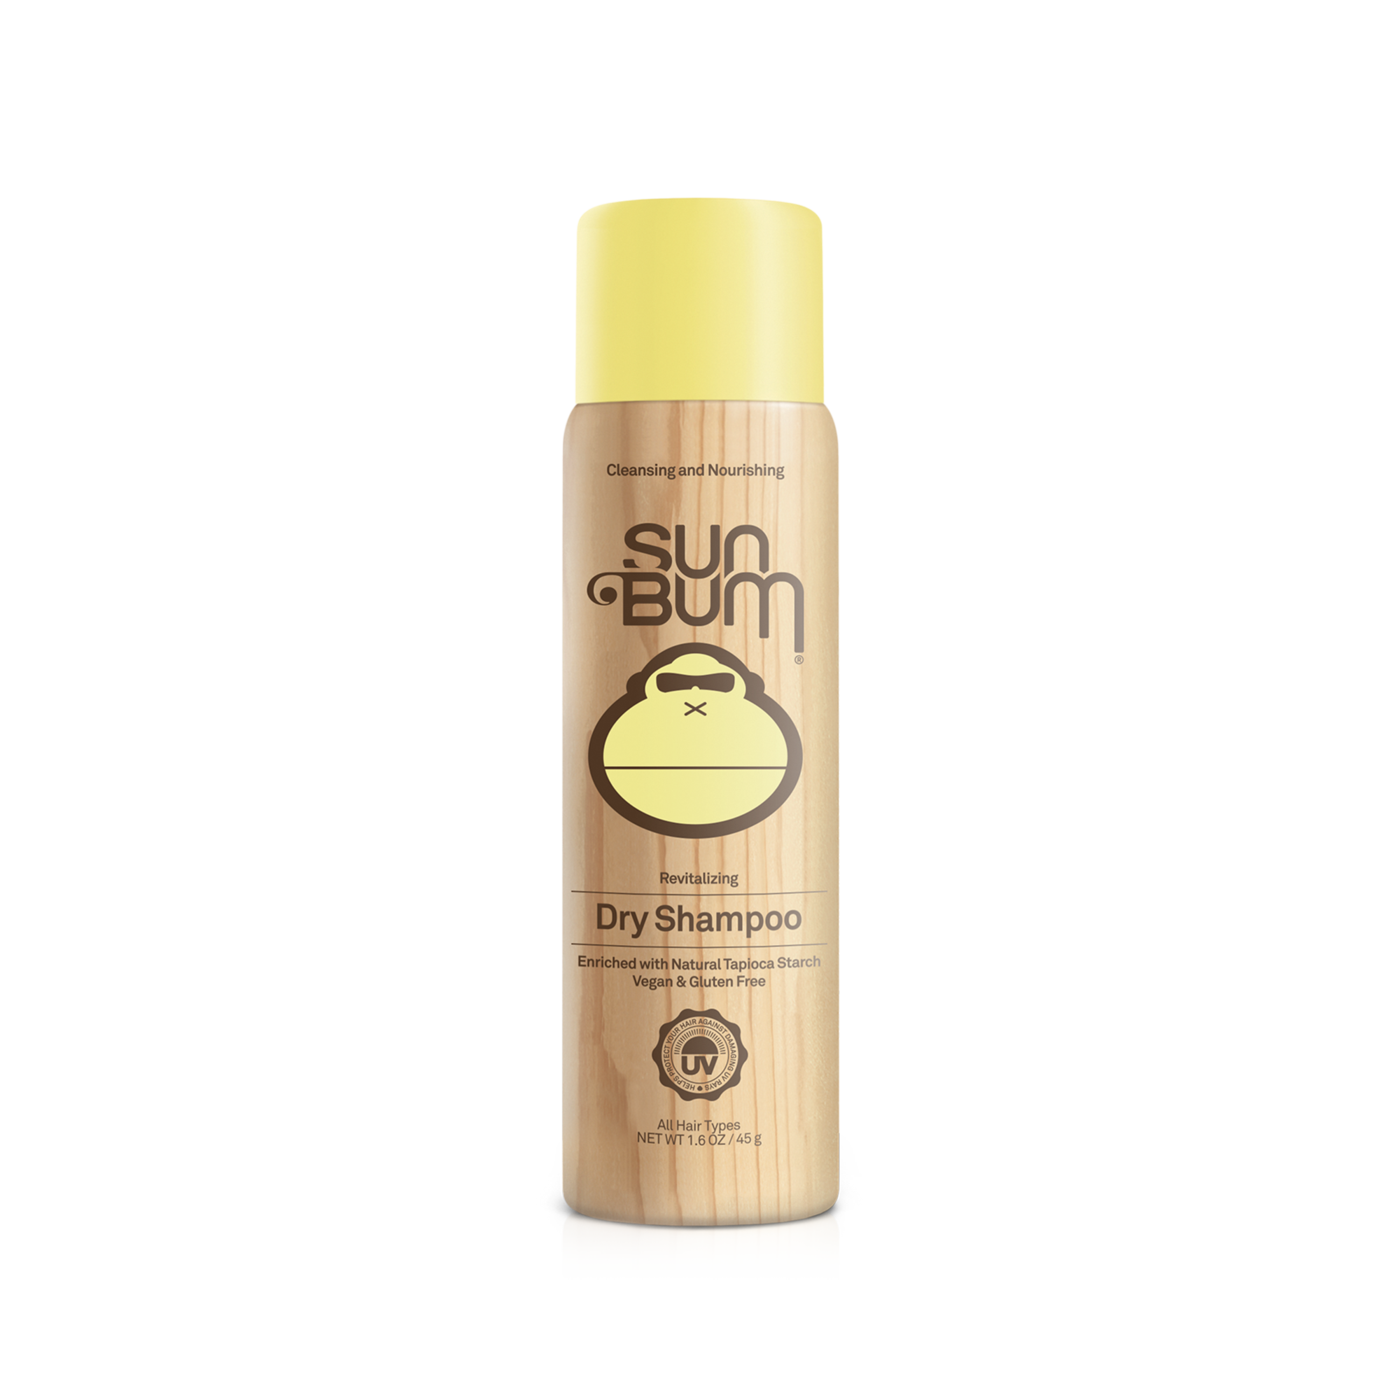 Sun Bum | Revitalizing Dry Shampoo Travel Size - 1.6oz.